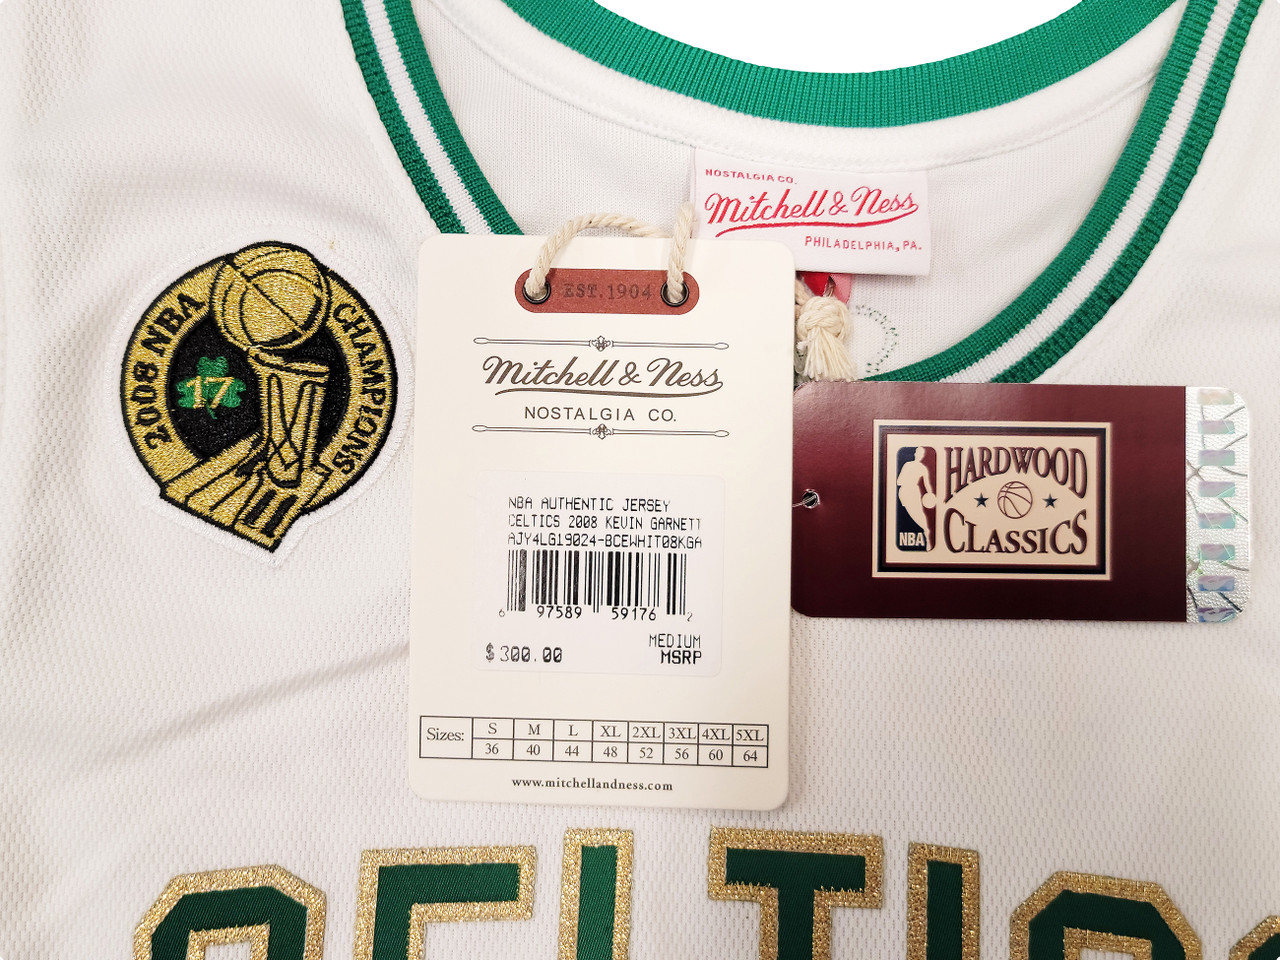 Kevin Garnett White Boston Celtics Autographed Mitchell & Ness 2008-09  Authentic Jersey